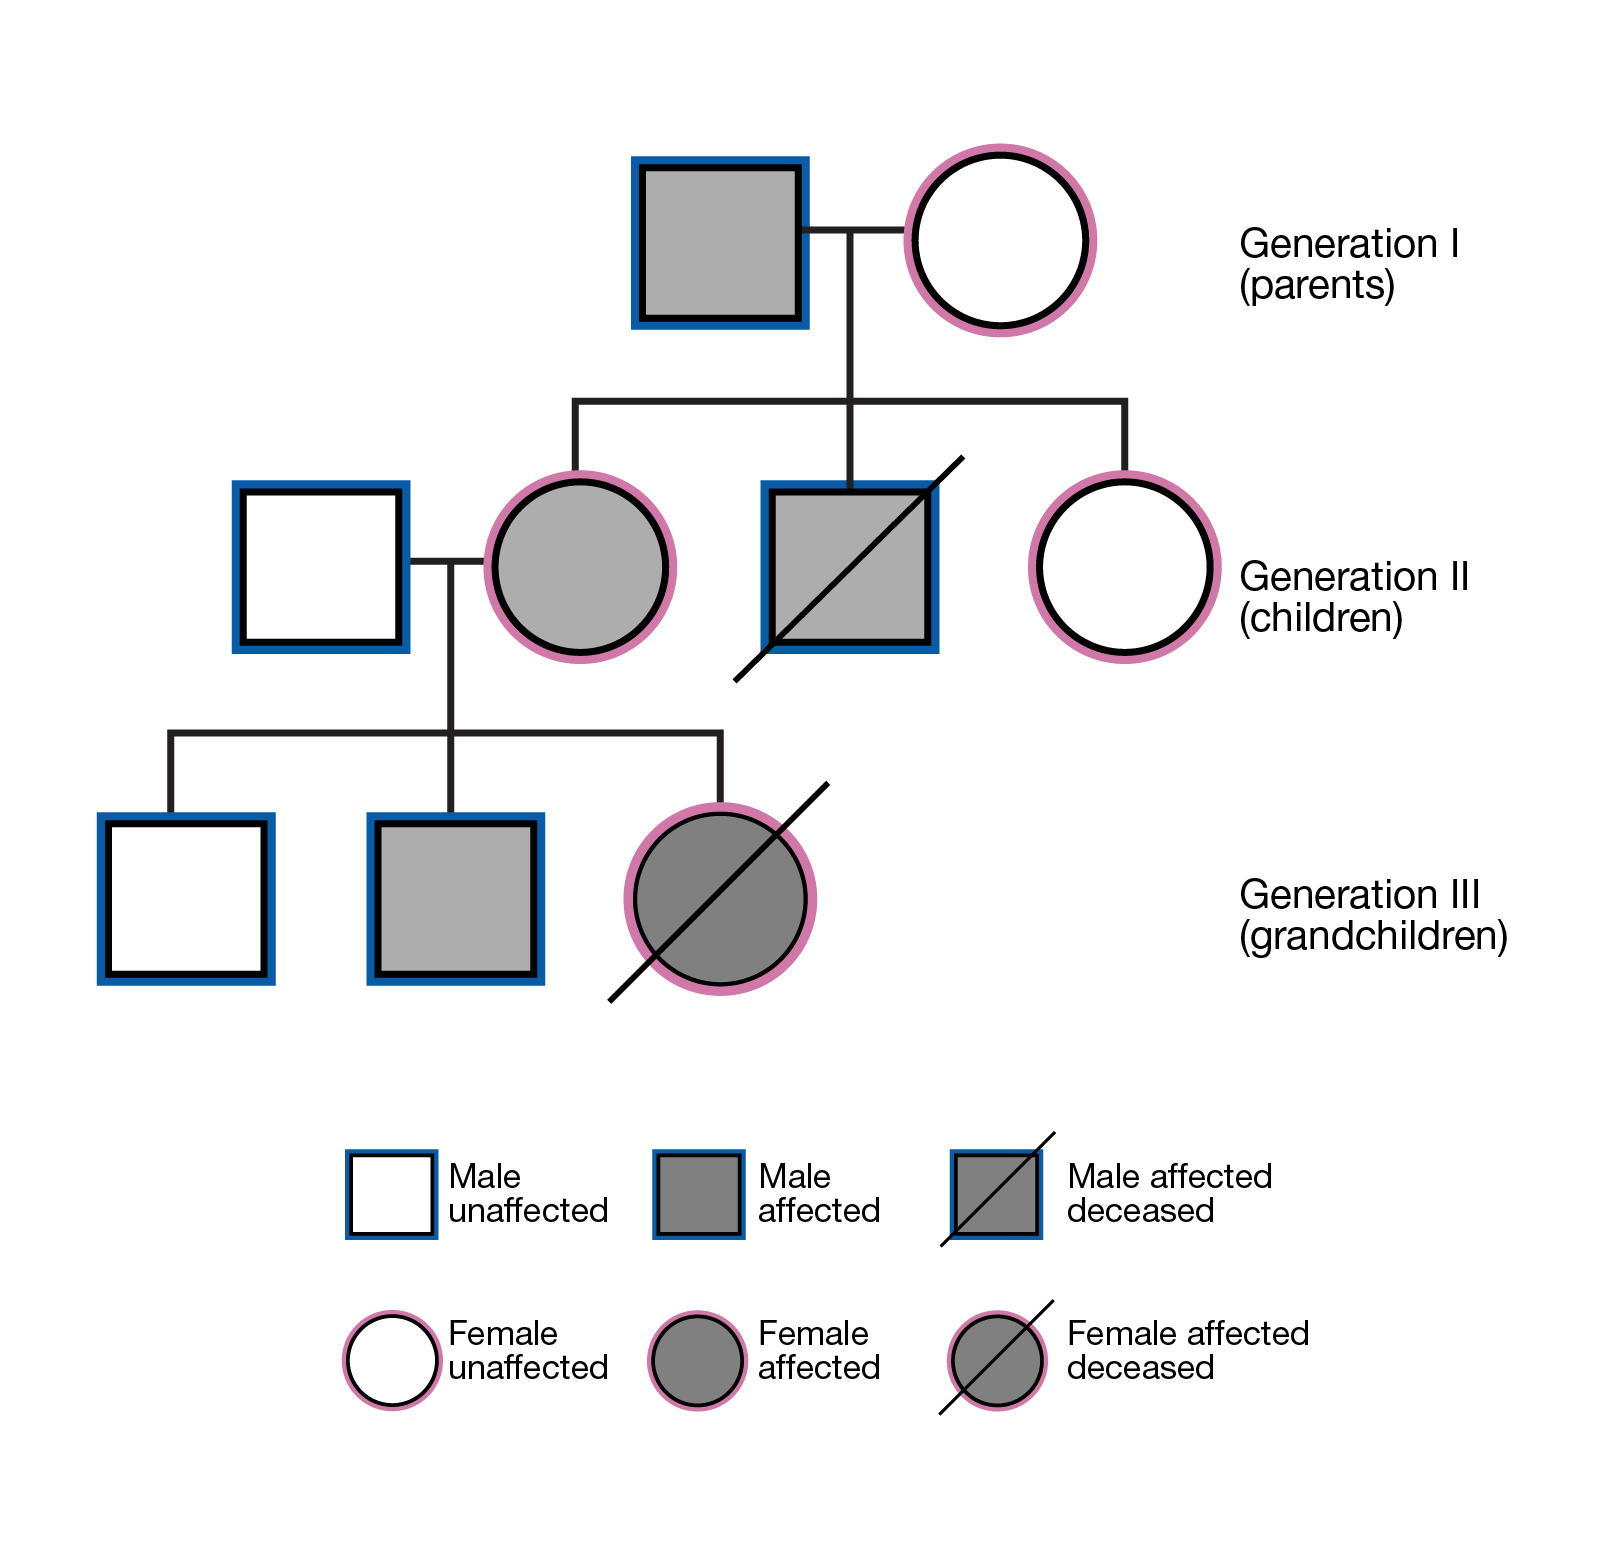 drawing-family-tree-genetics-pic-family-history-template-tool-genomics-education-programme